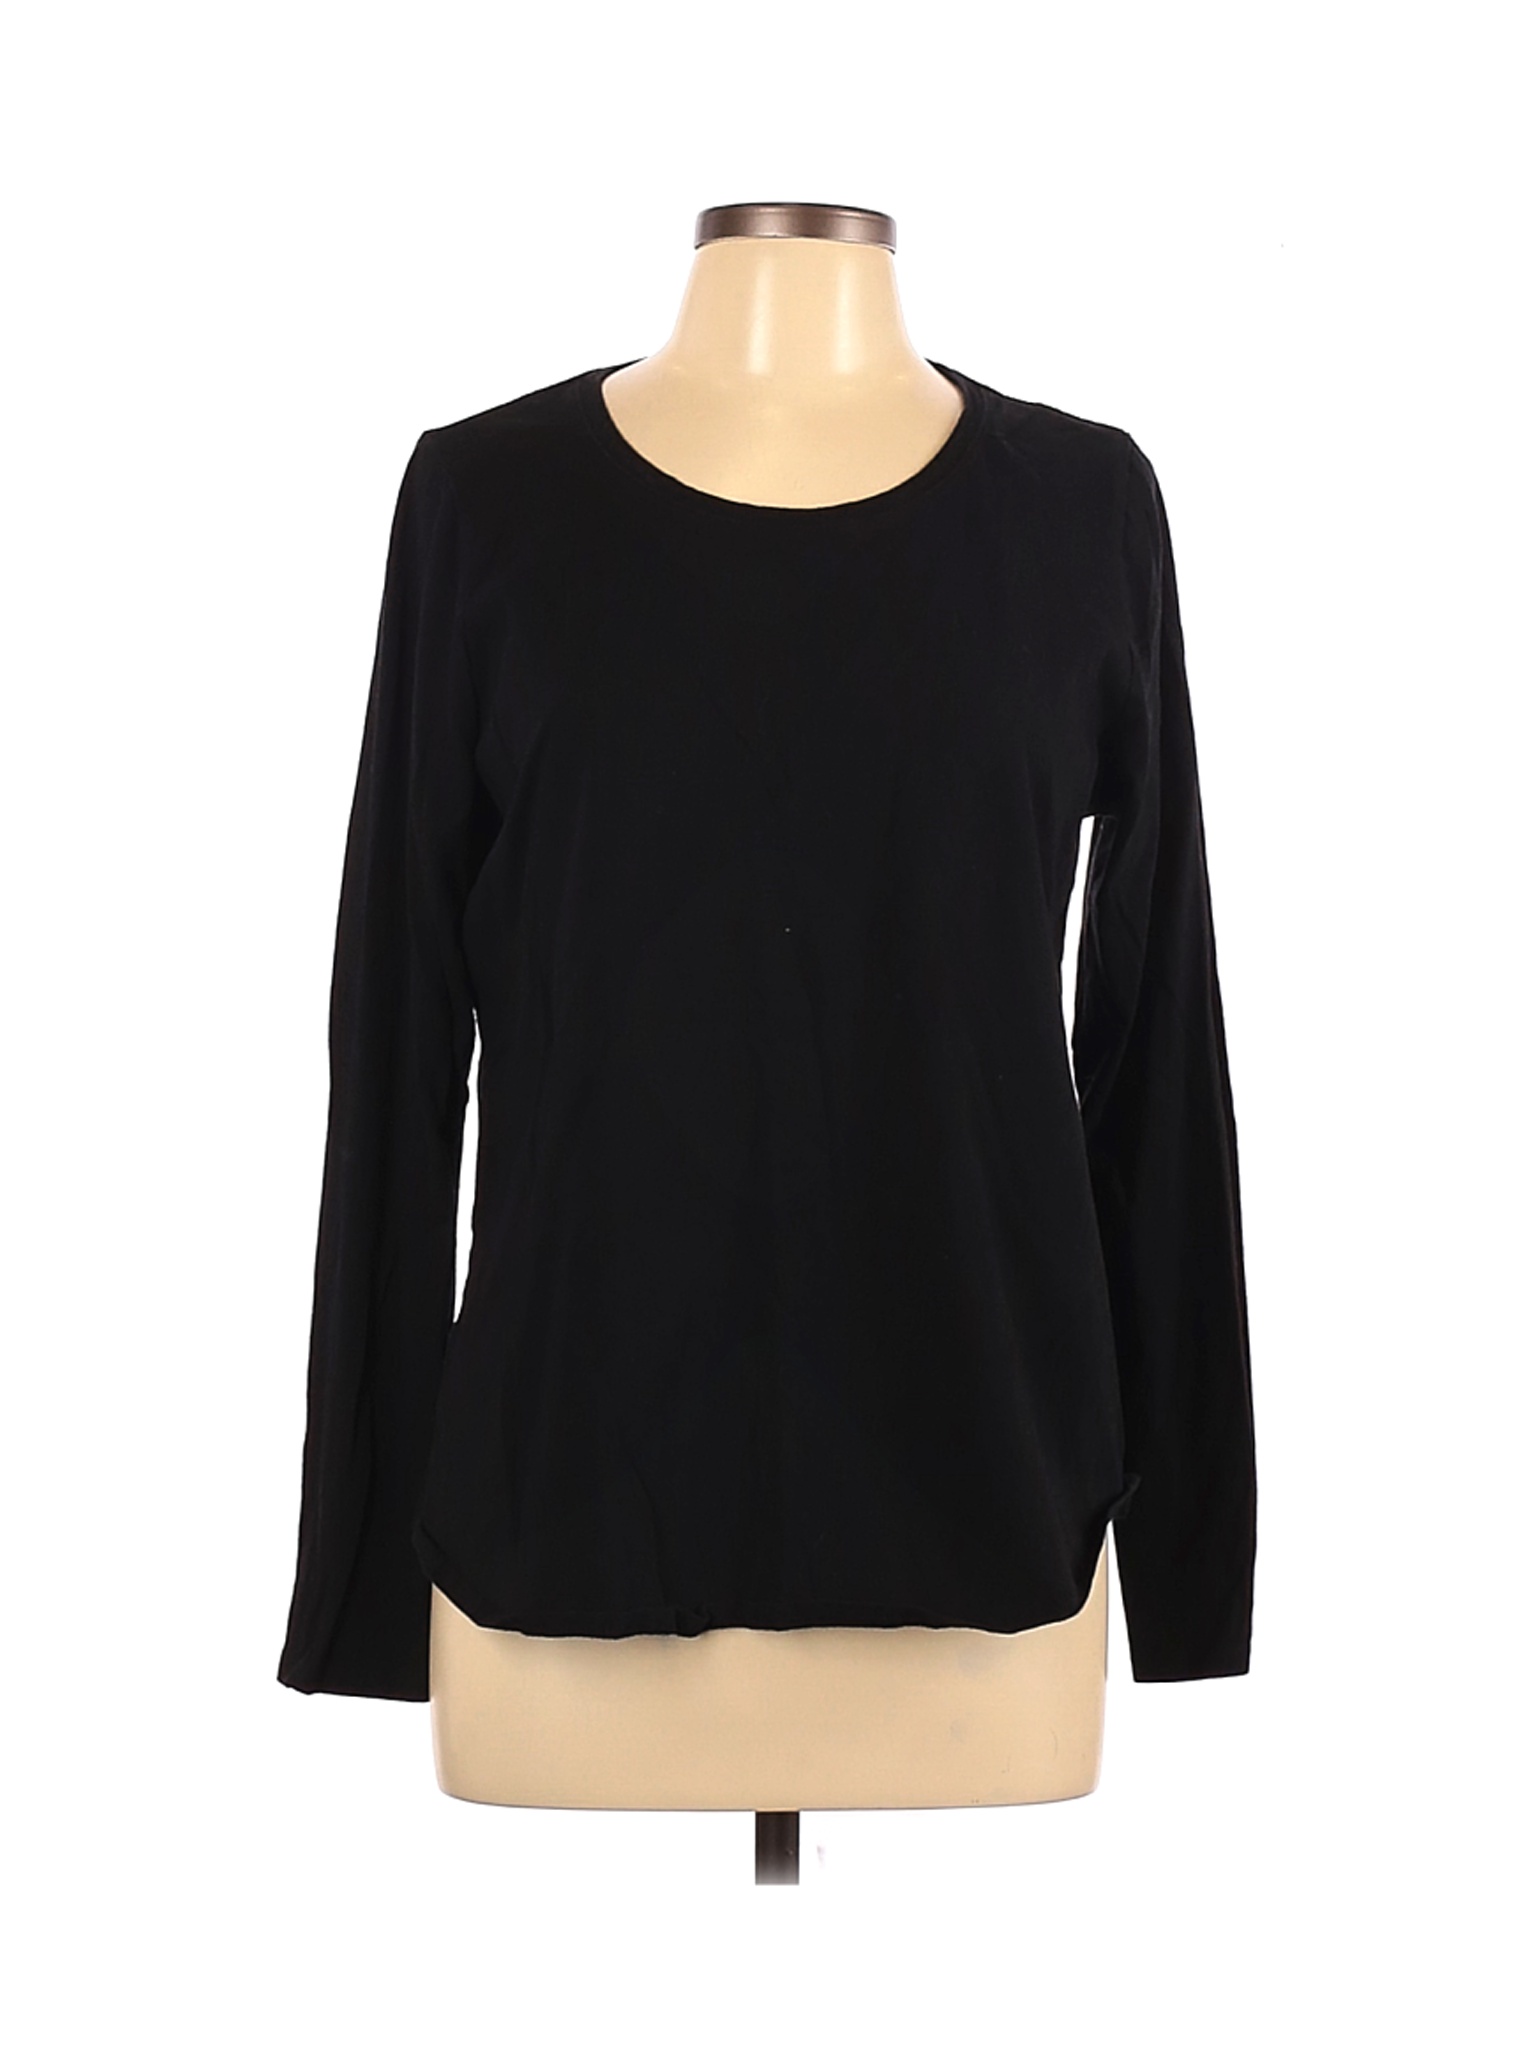 SONOMA life + style Women Black Long Sleeve T-Shirt XL | eBay